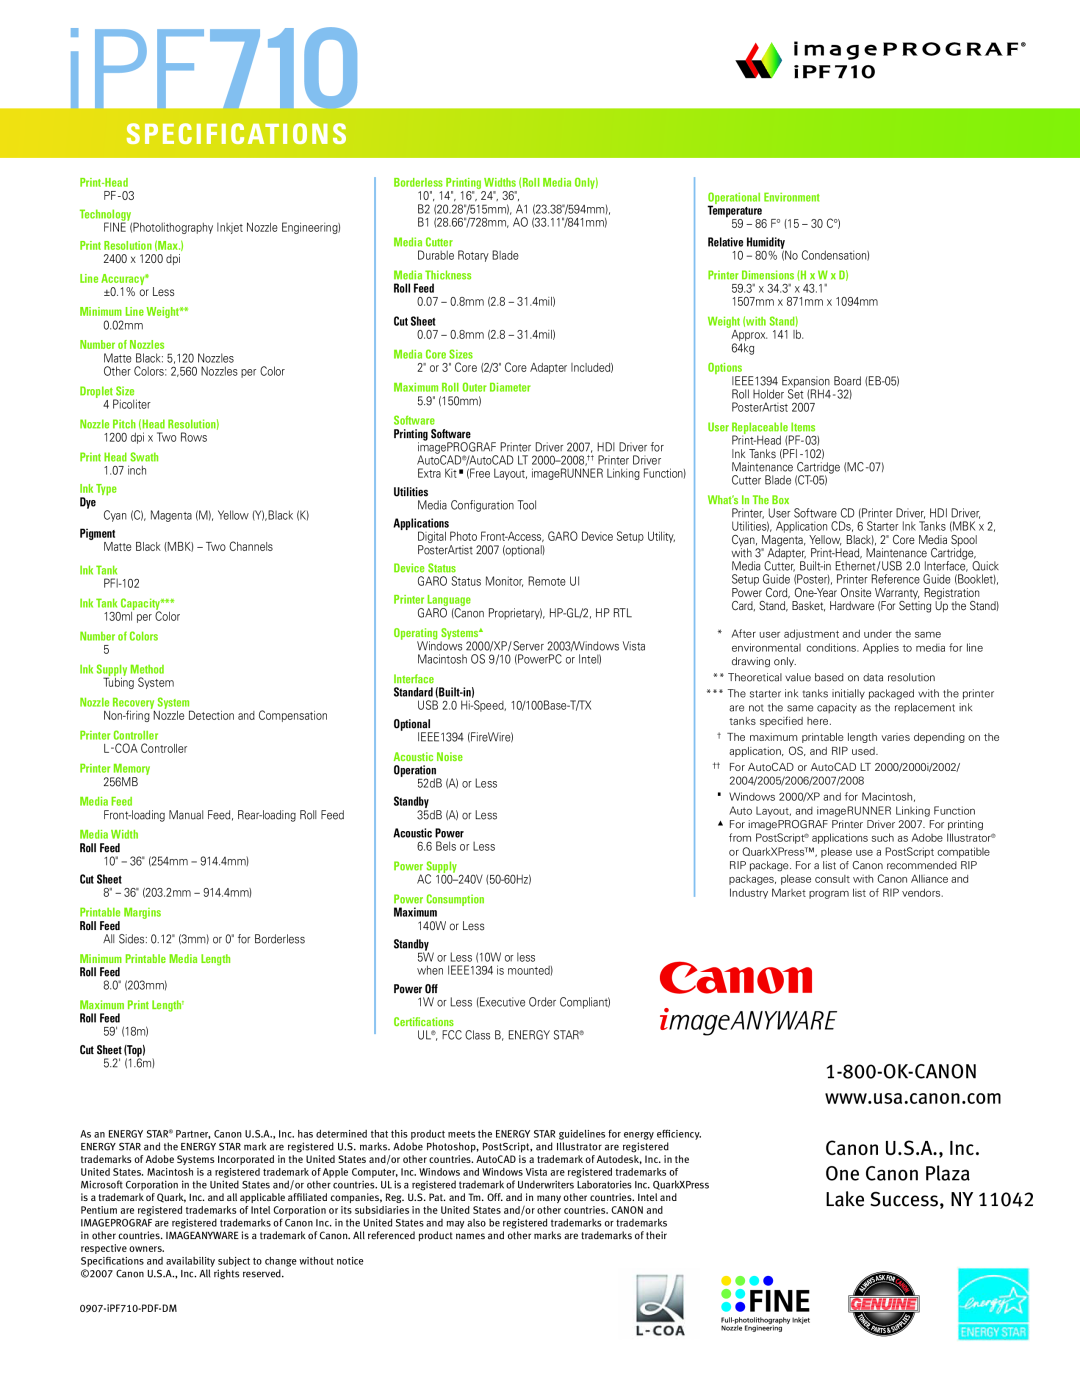 Canon IPF710 manual iPF710, Specifications, Canon U.S.A., Inc One Canon Plaza Lake Success, NY 